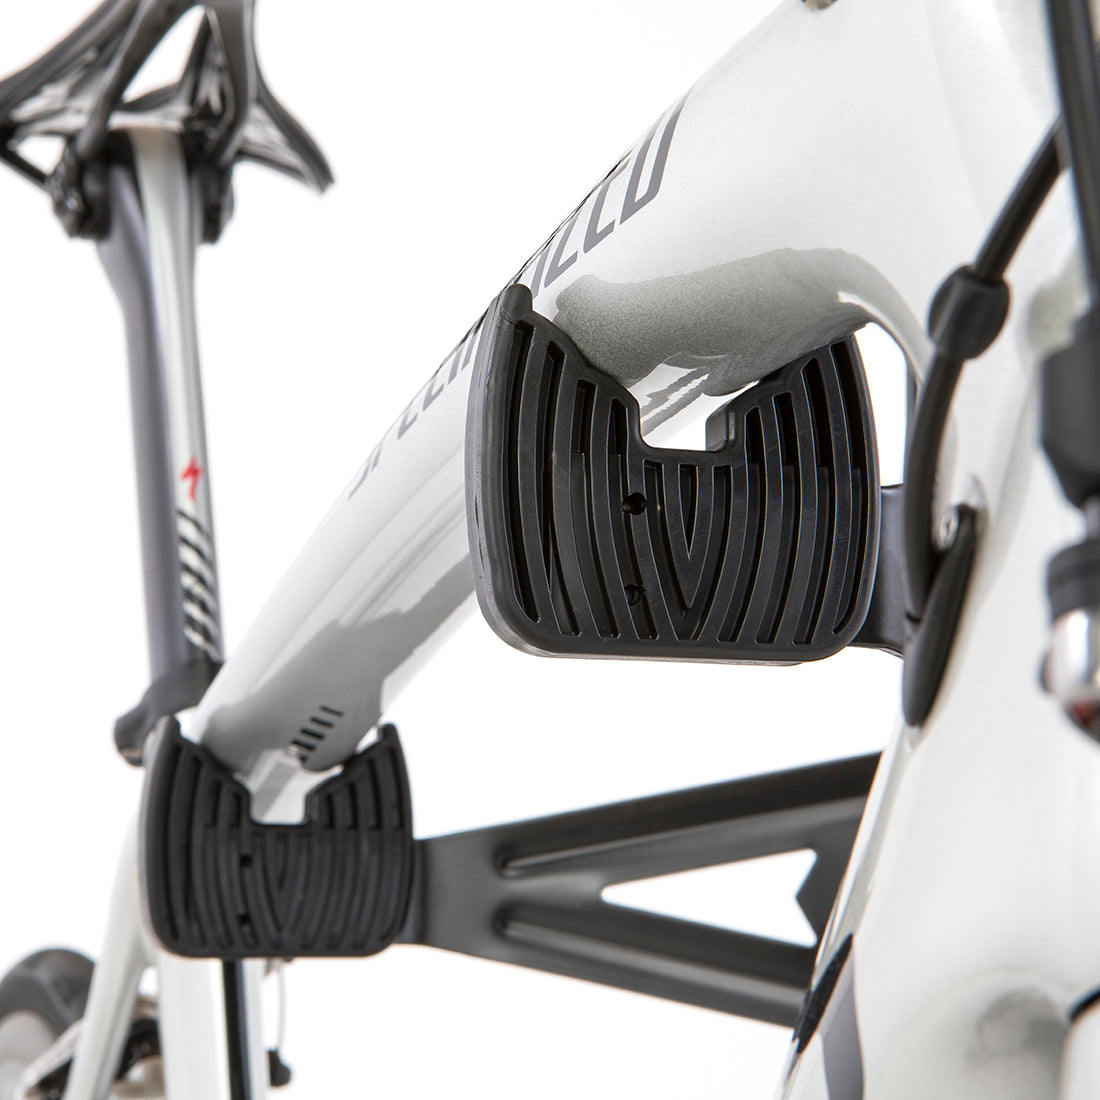 Close up of bike storage cradles with white bike installed.